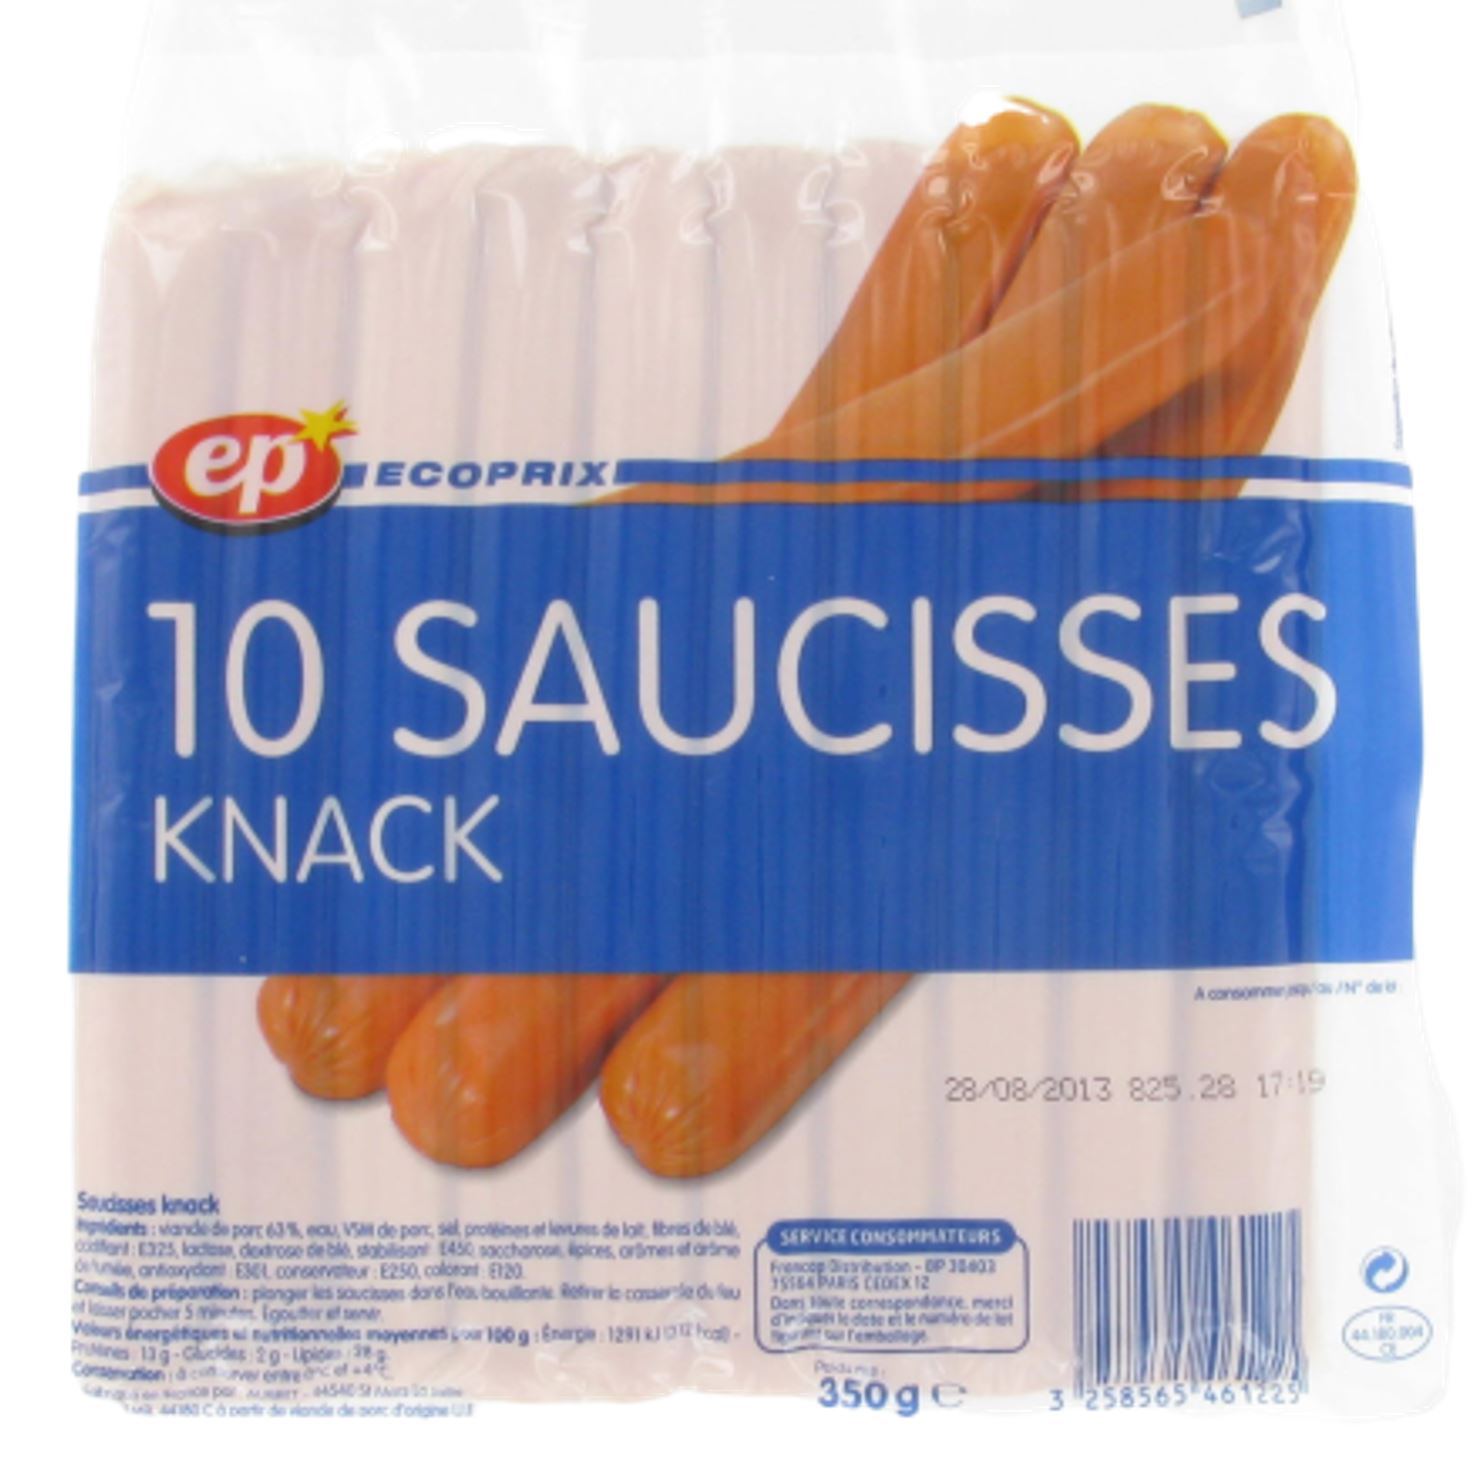 Saucisse knack x 10